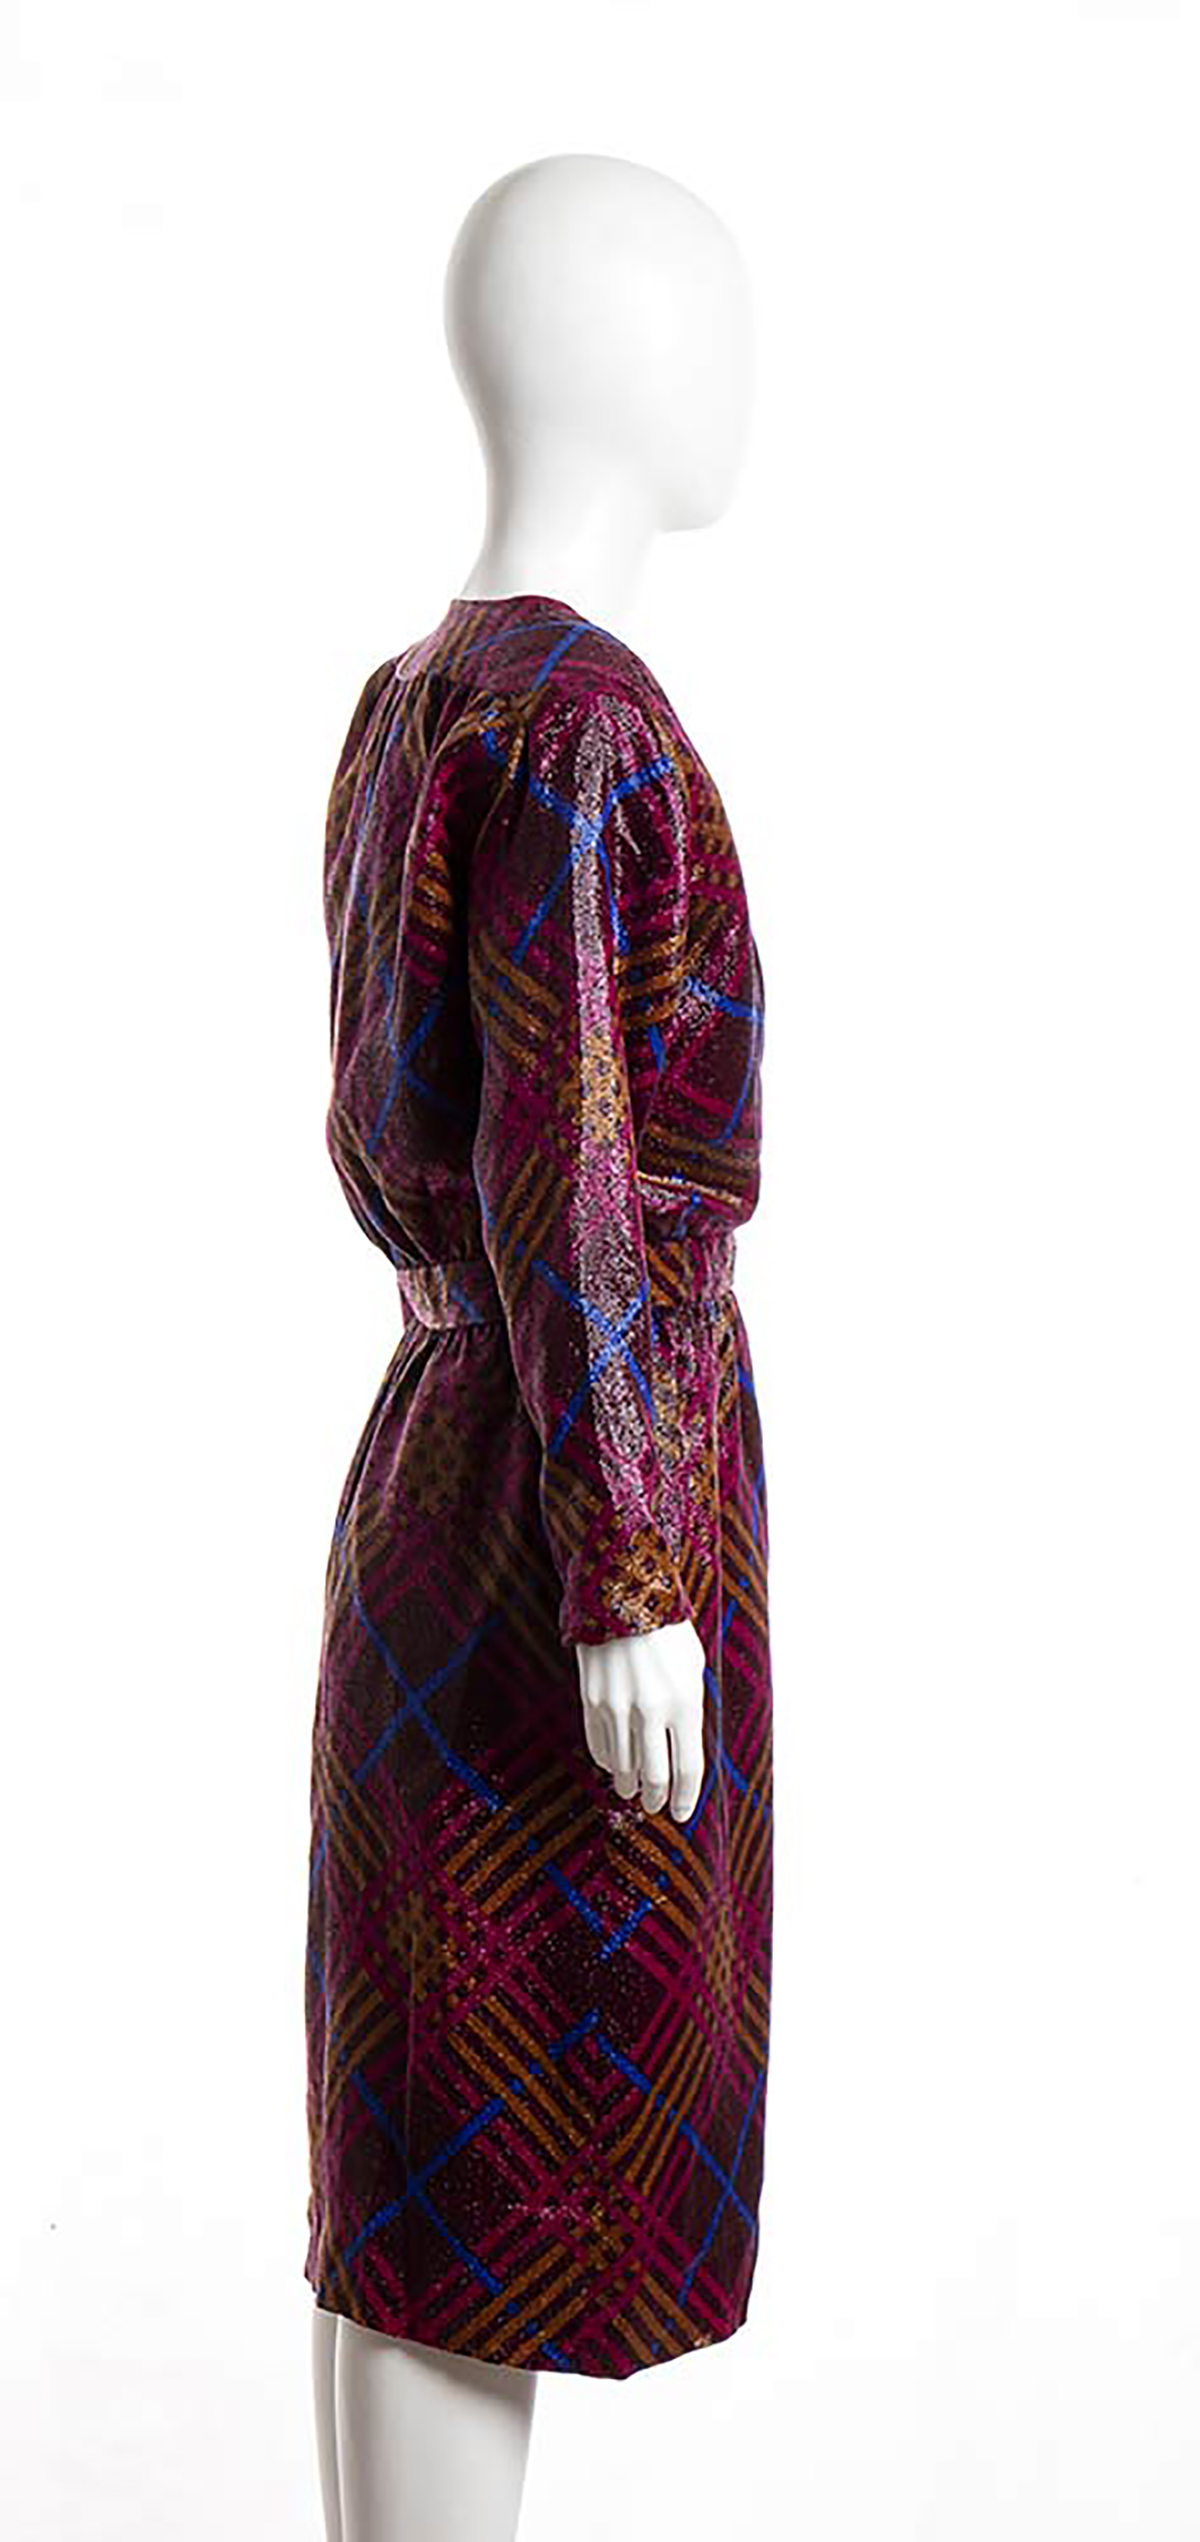 SAINT LAURENT RIVE GAUCHE DRESS 80s Polyester blend lurex tartan pattern dress, General conditions - Image 2 of 4